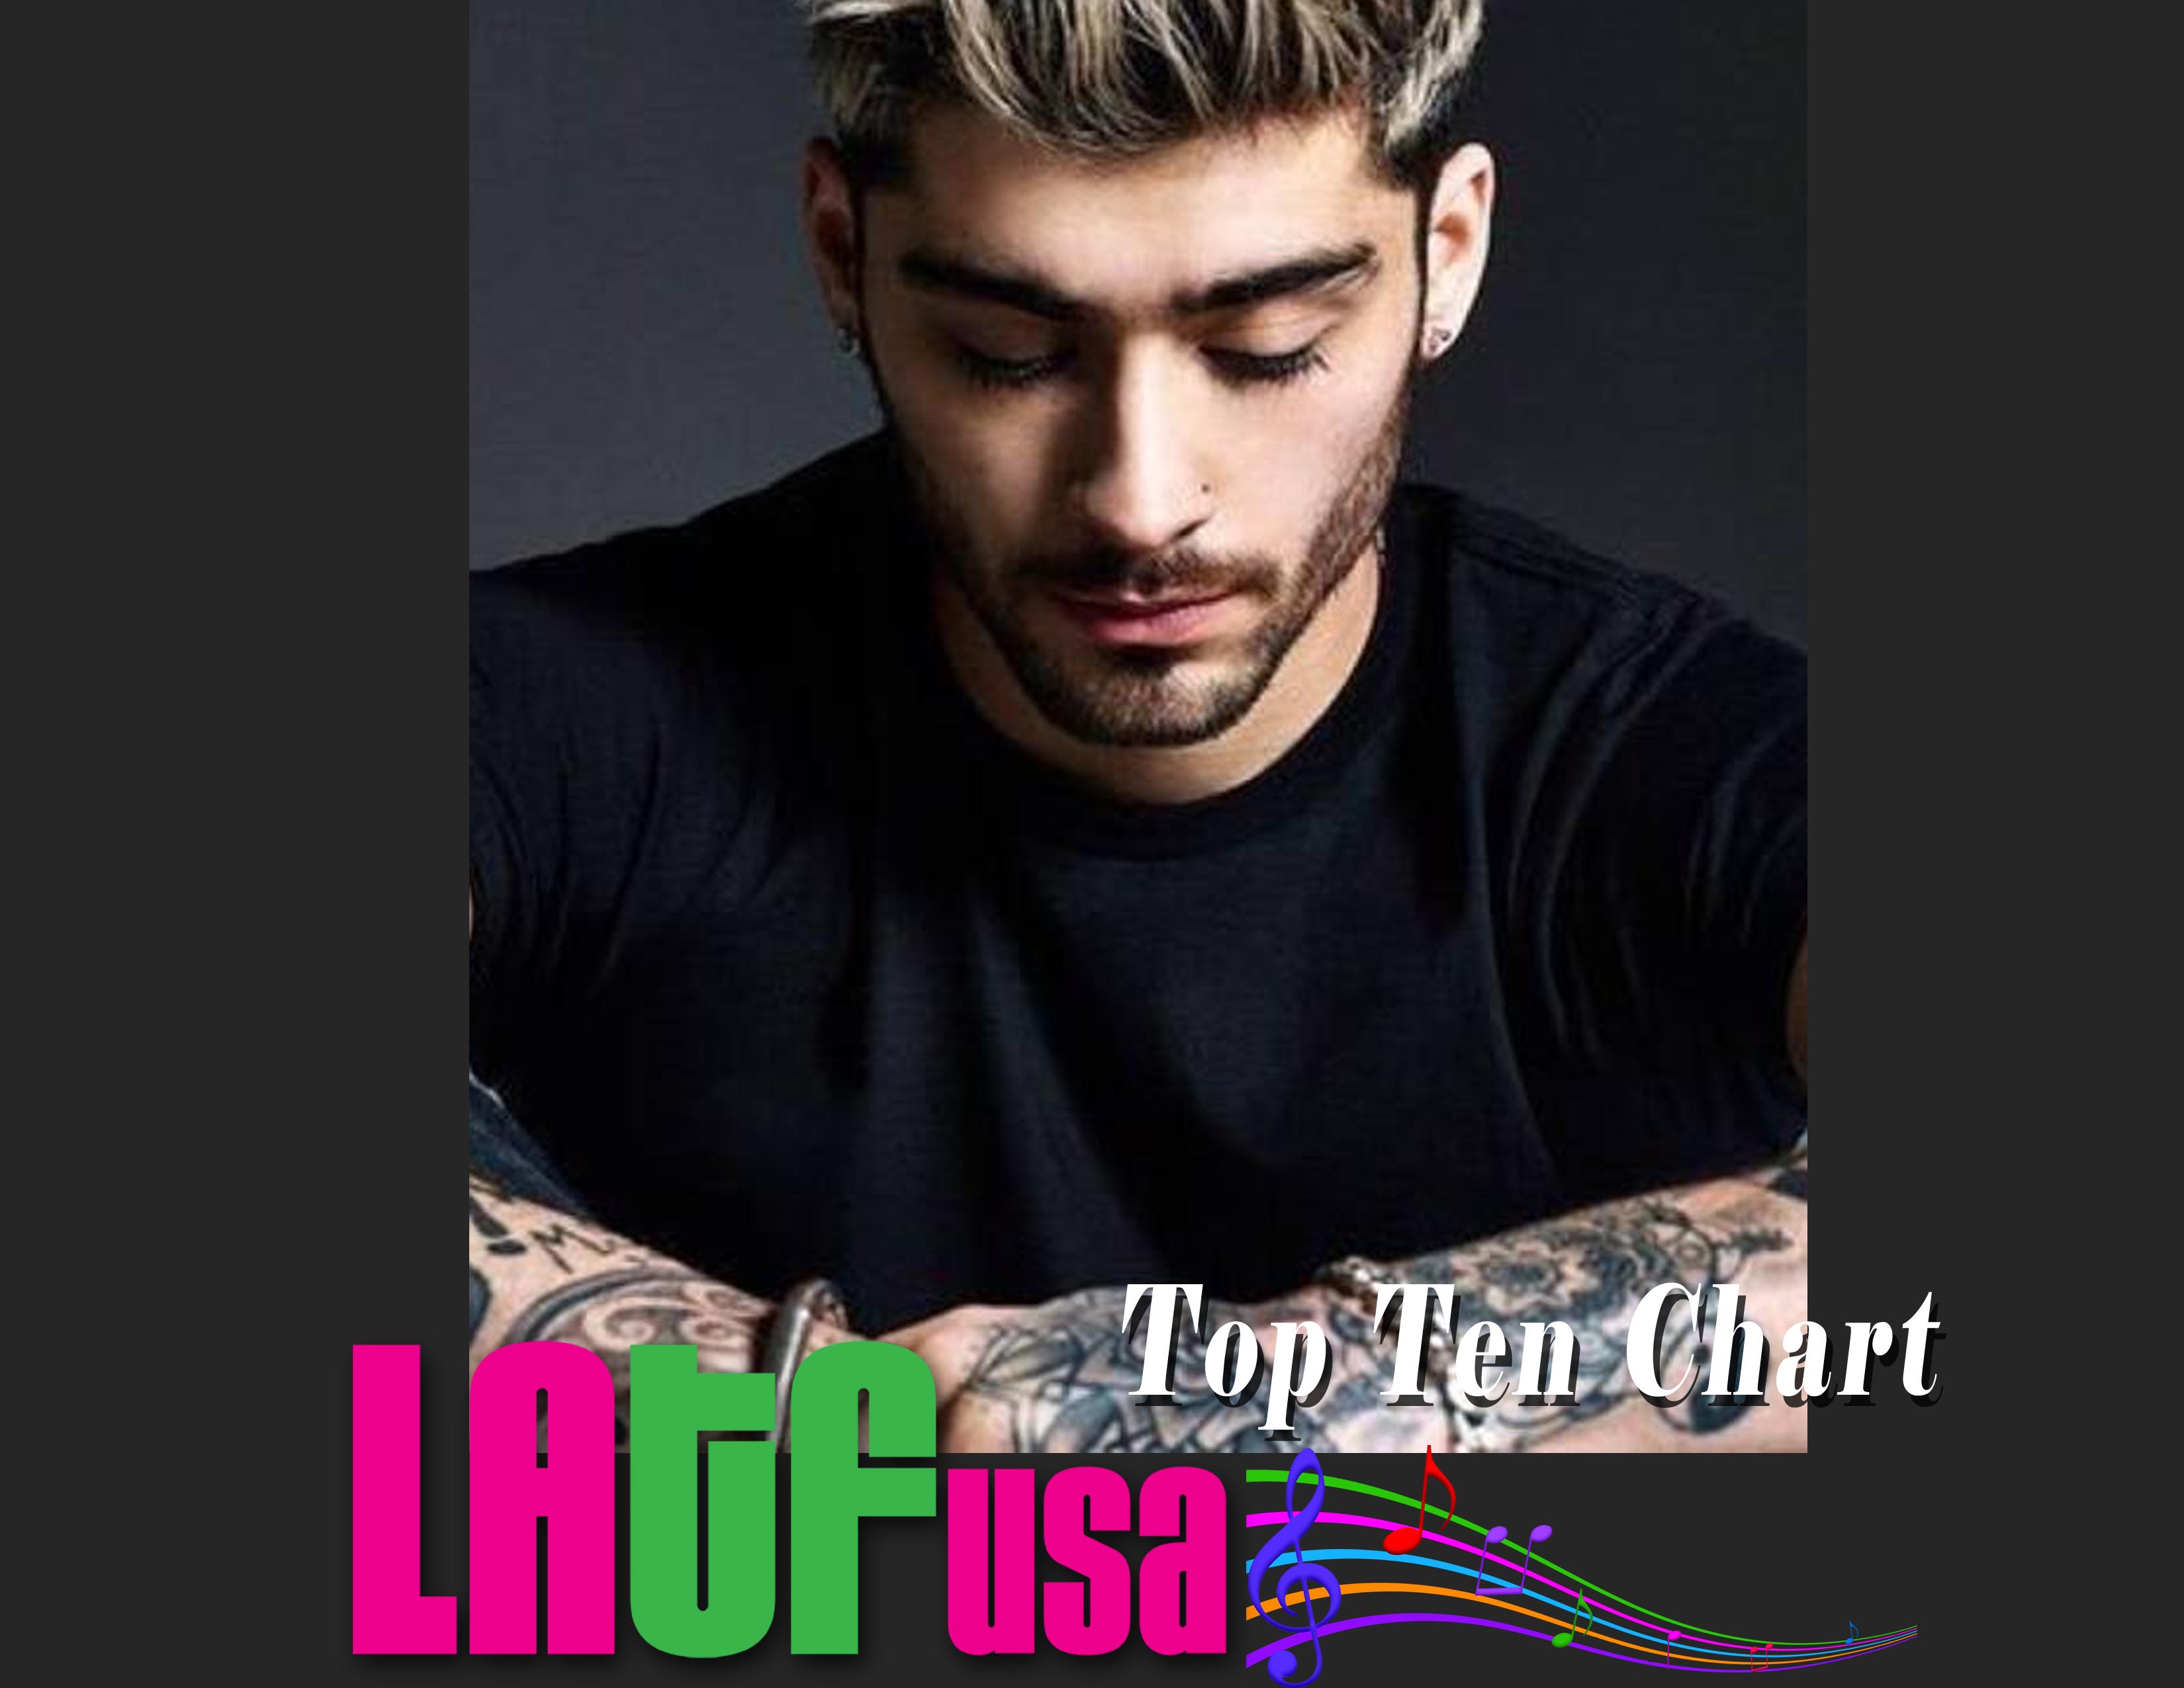 Zayn malik LATF USA top ten music chart